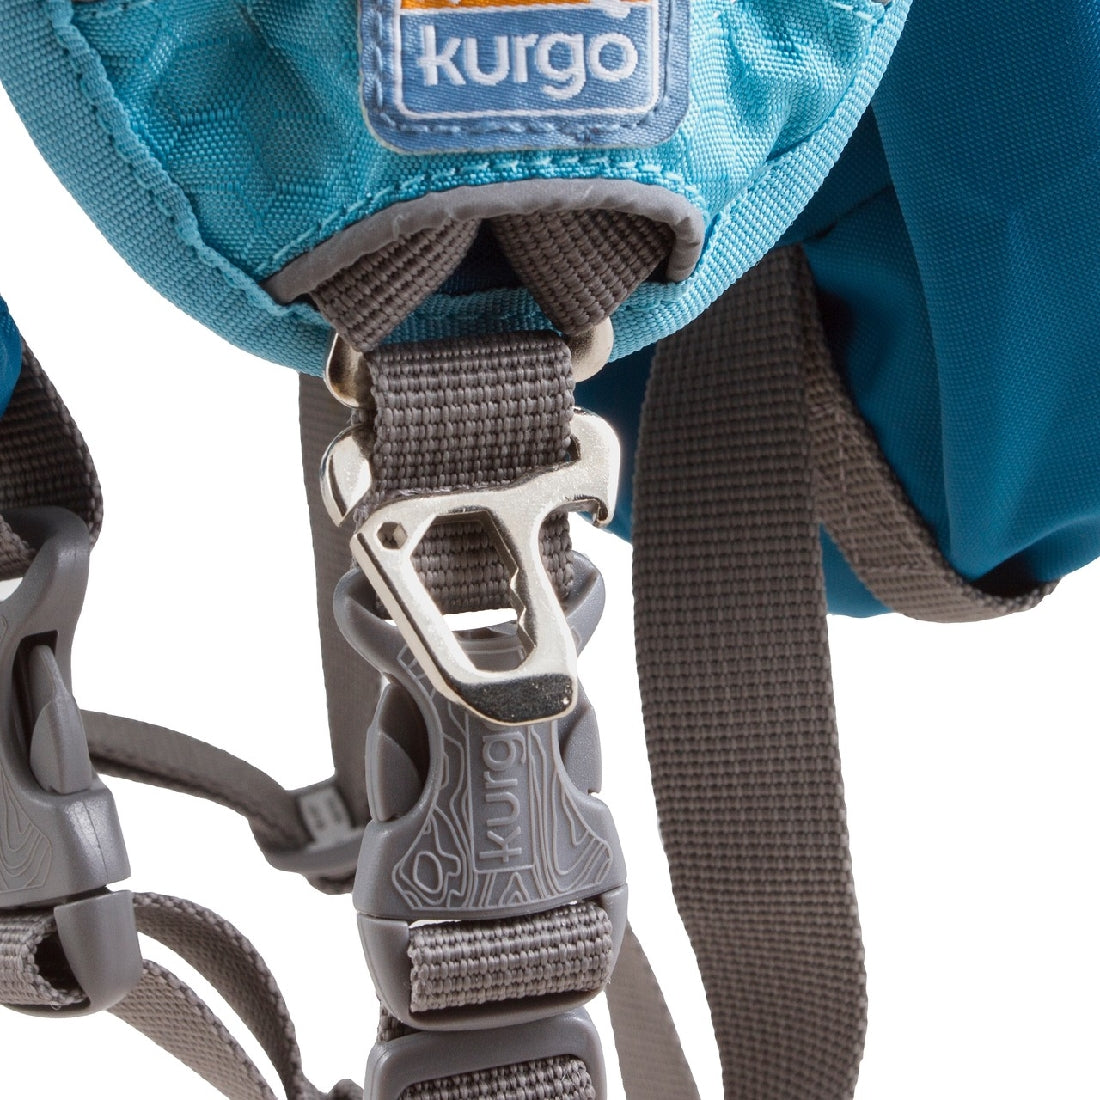 Kurgo Dog Backpack Big Baxter Coastal Blue-Ascot Saddlery-The Equestrian